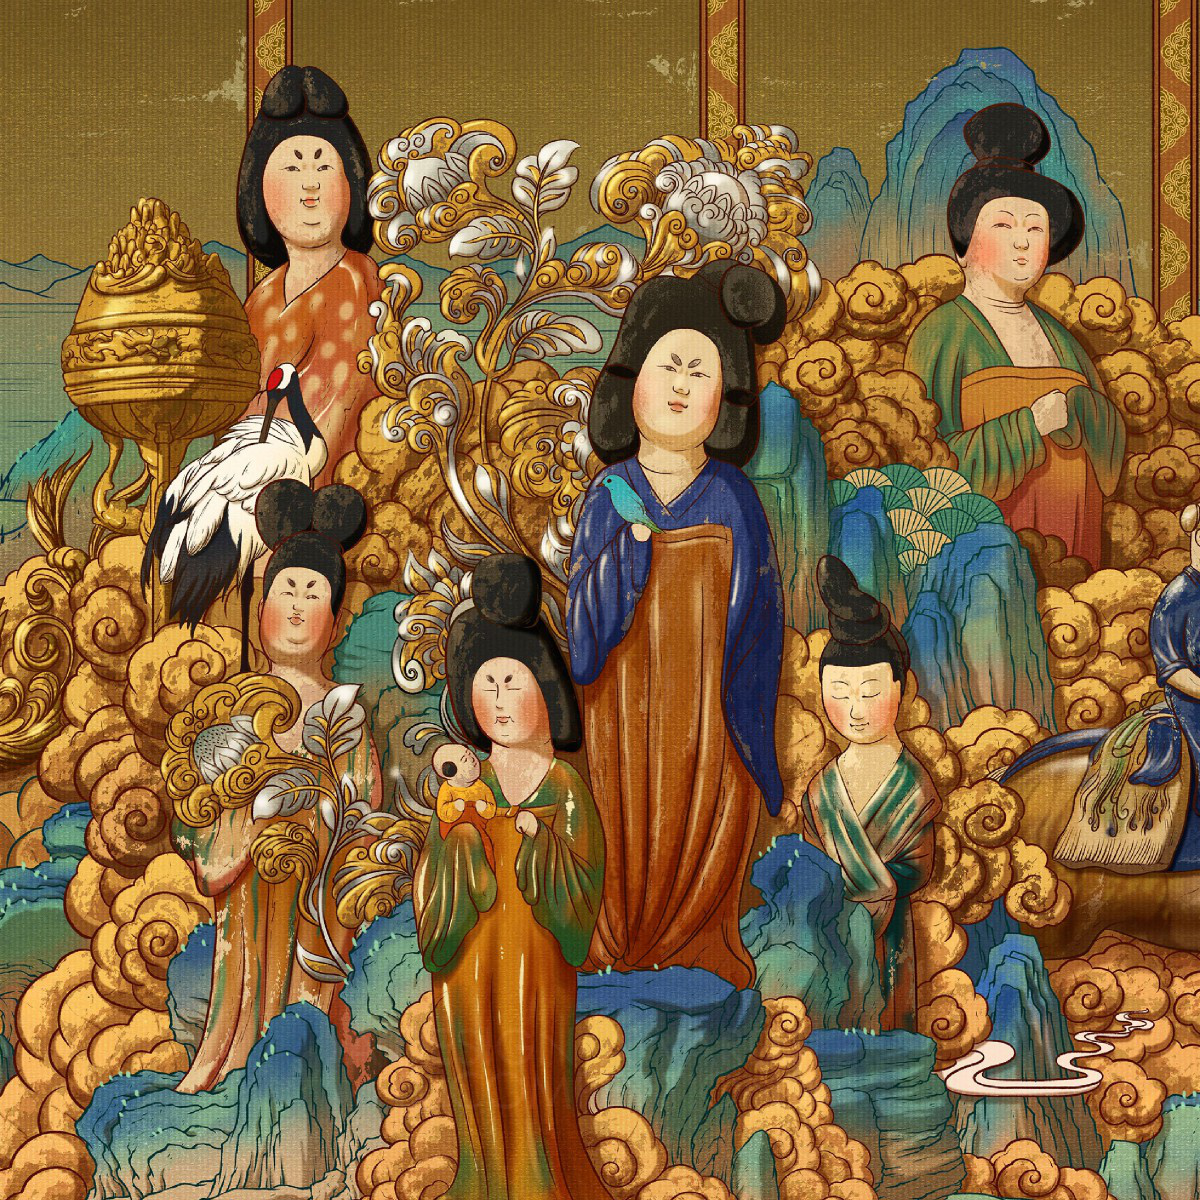 Chang'an Still Illustration Series by Wu yao